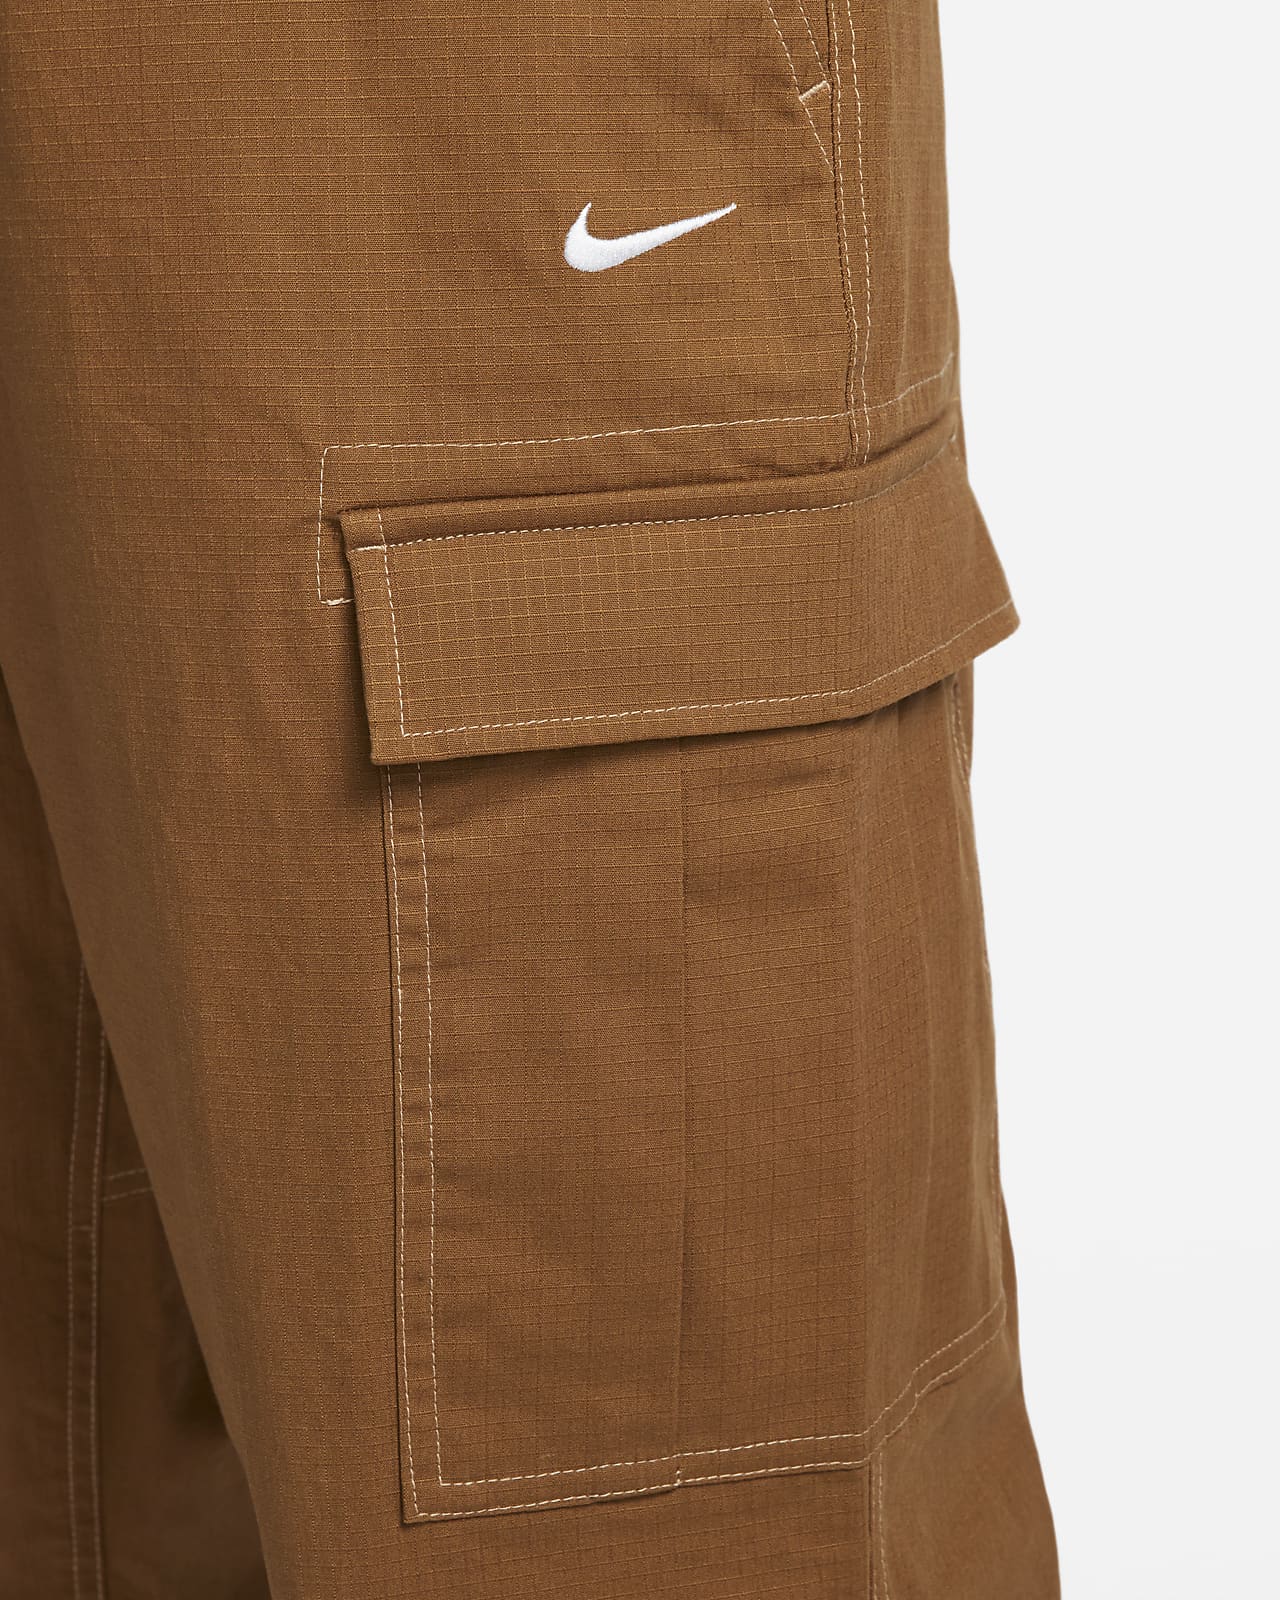 Nike SB Kearny Skate Cargo Pants